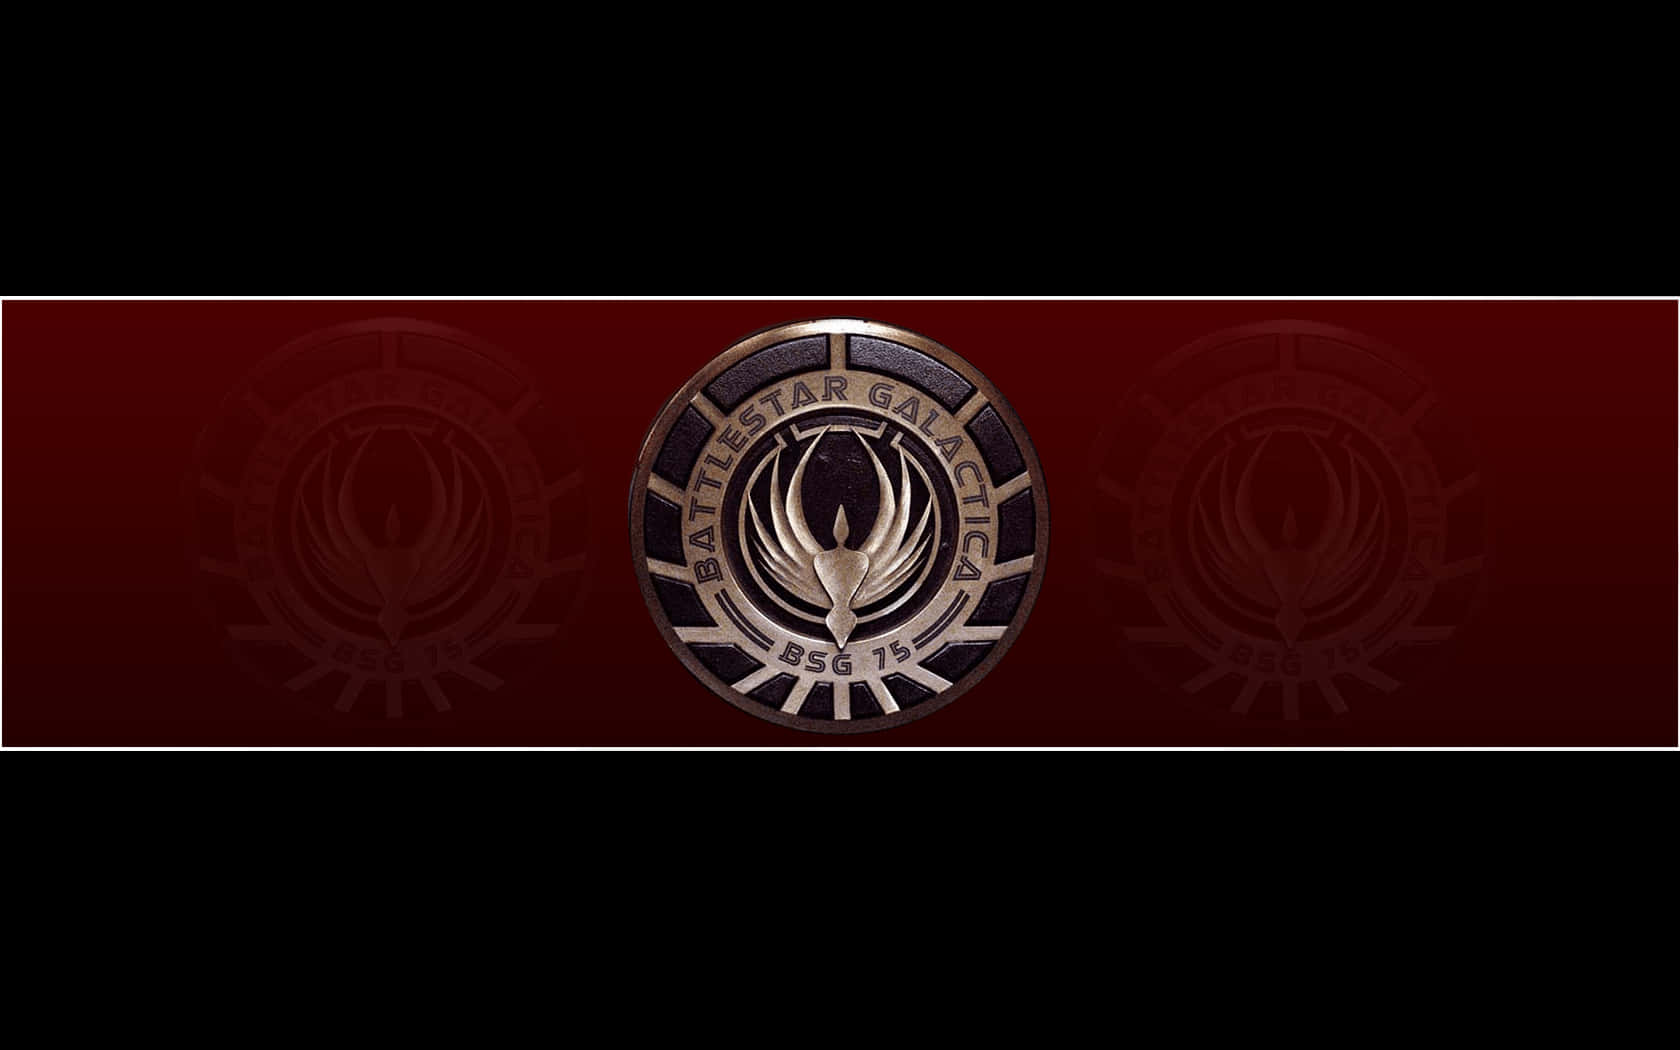 Emblemade Battlestar Galactica En Rojo Y Negro. Fondo de pantalla